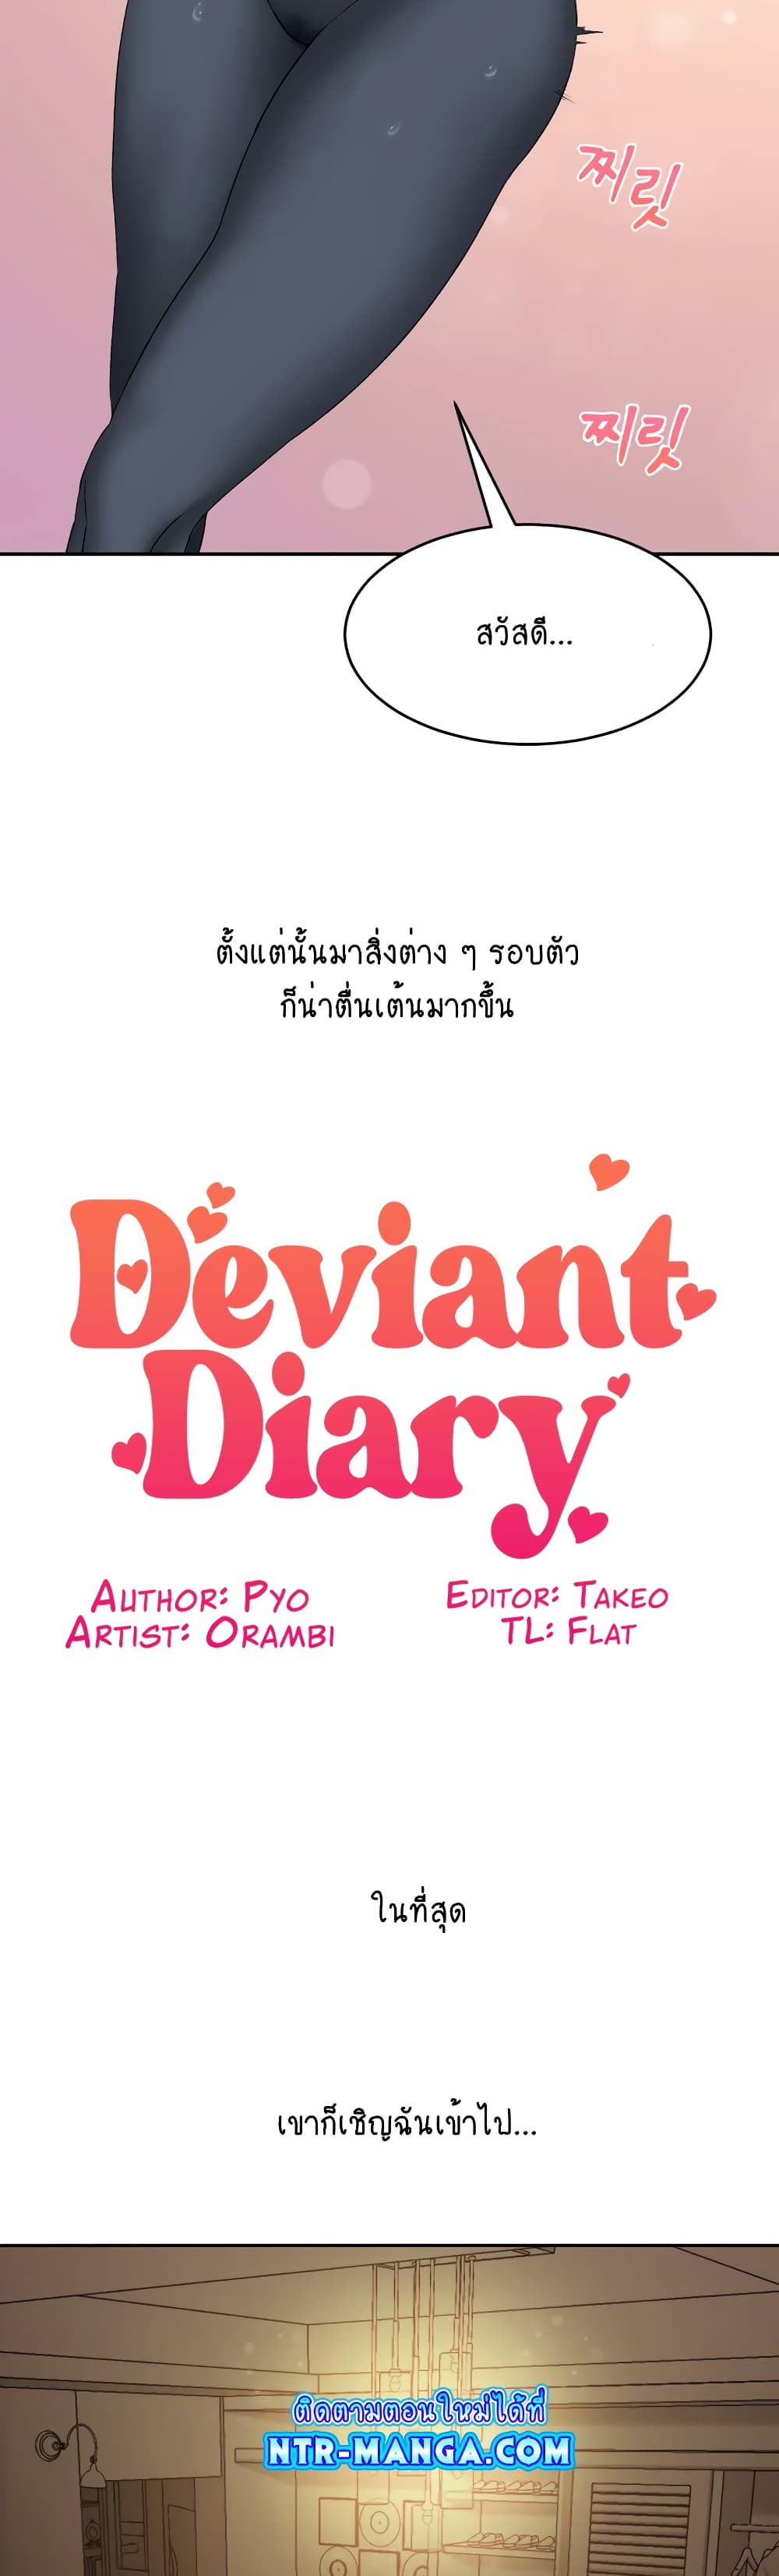 Deviant Diary 27-27